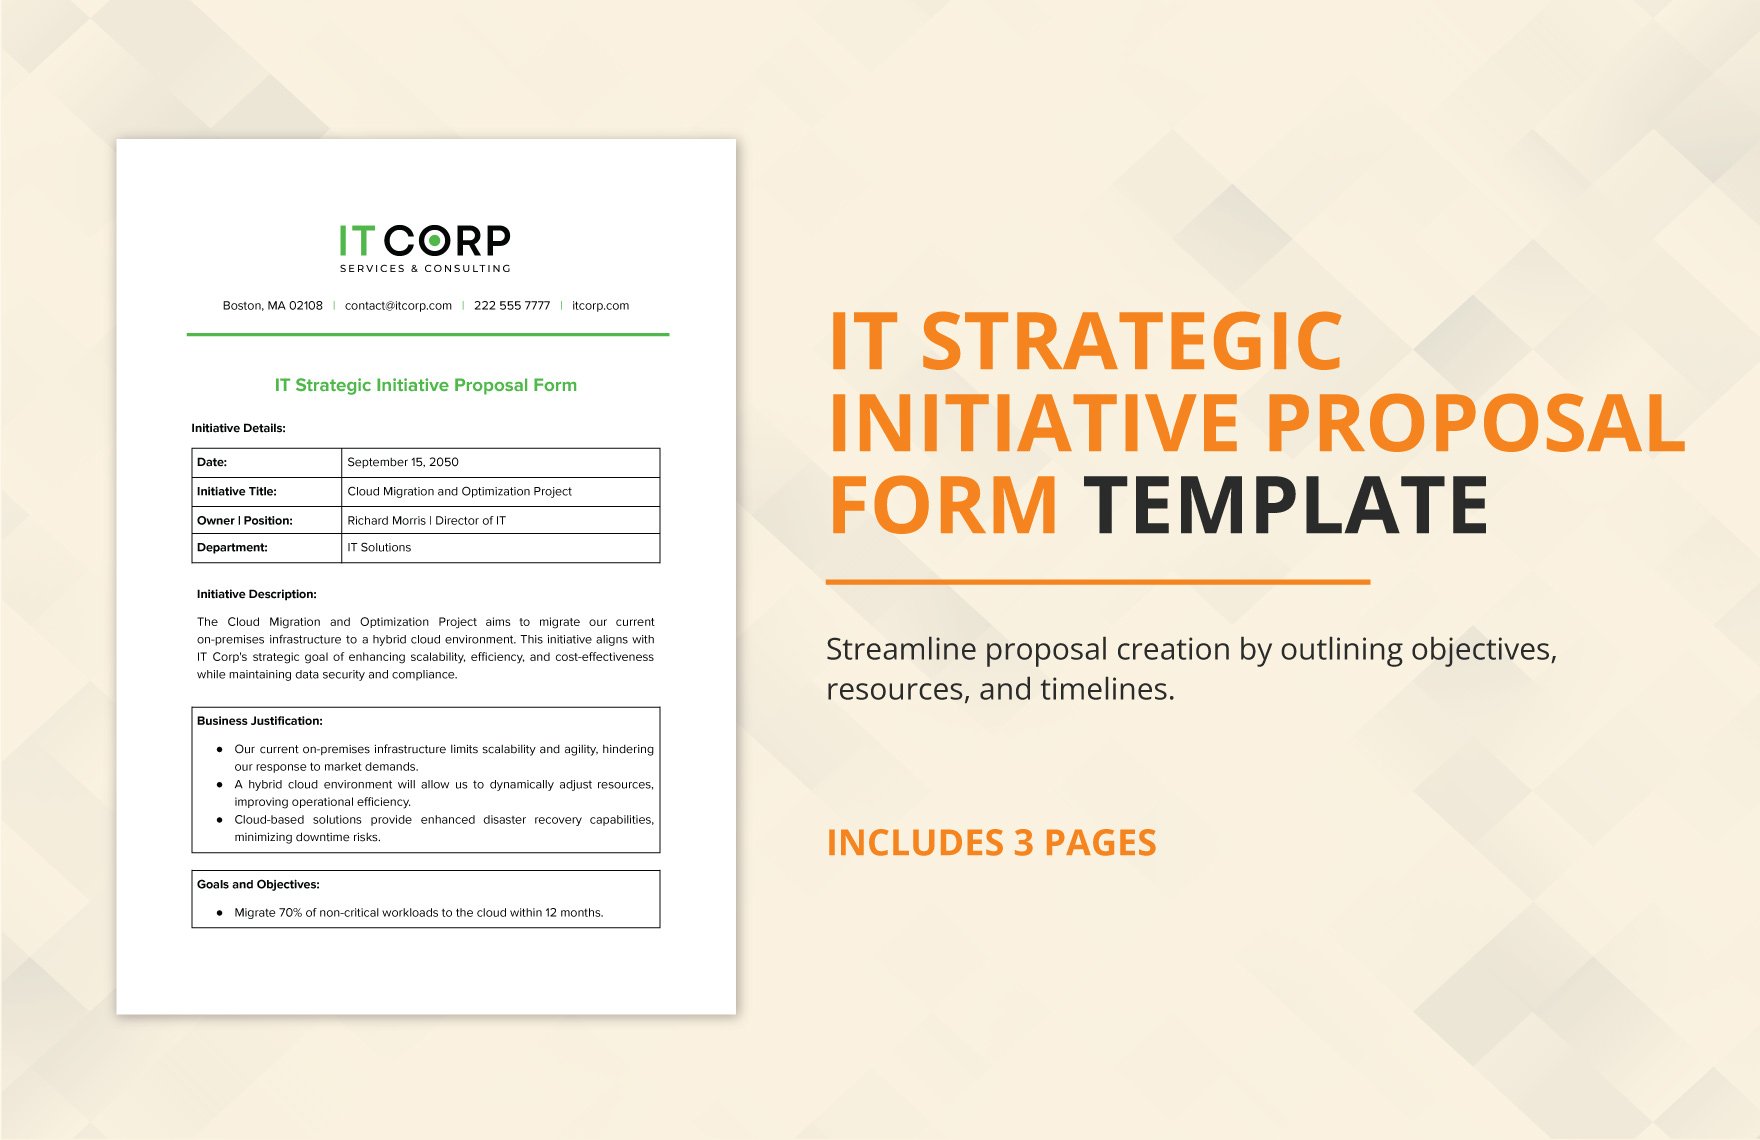 IT Strategic Initiative Proposal Form Template in Word, Google Docs, PDF